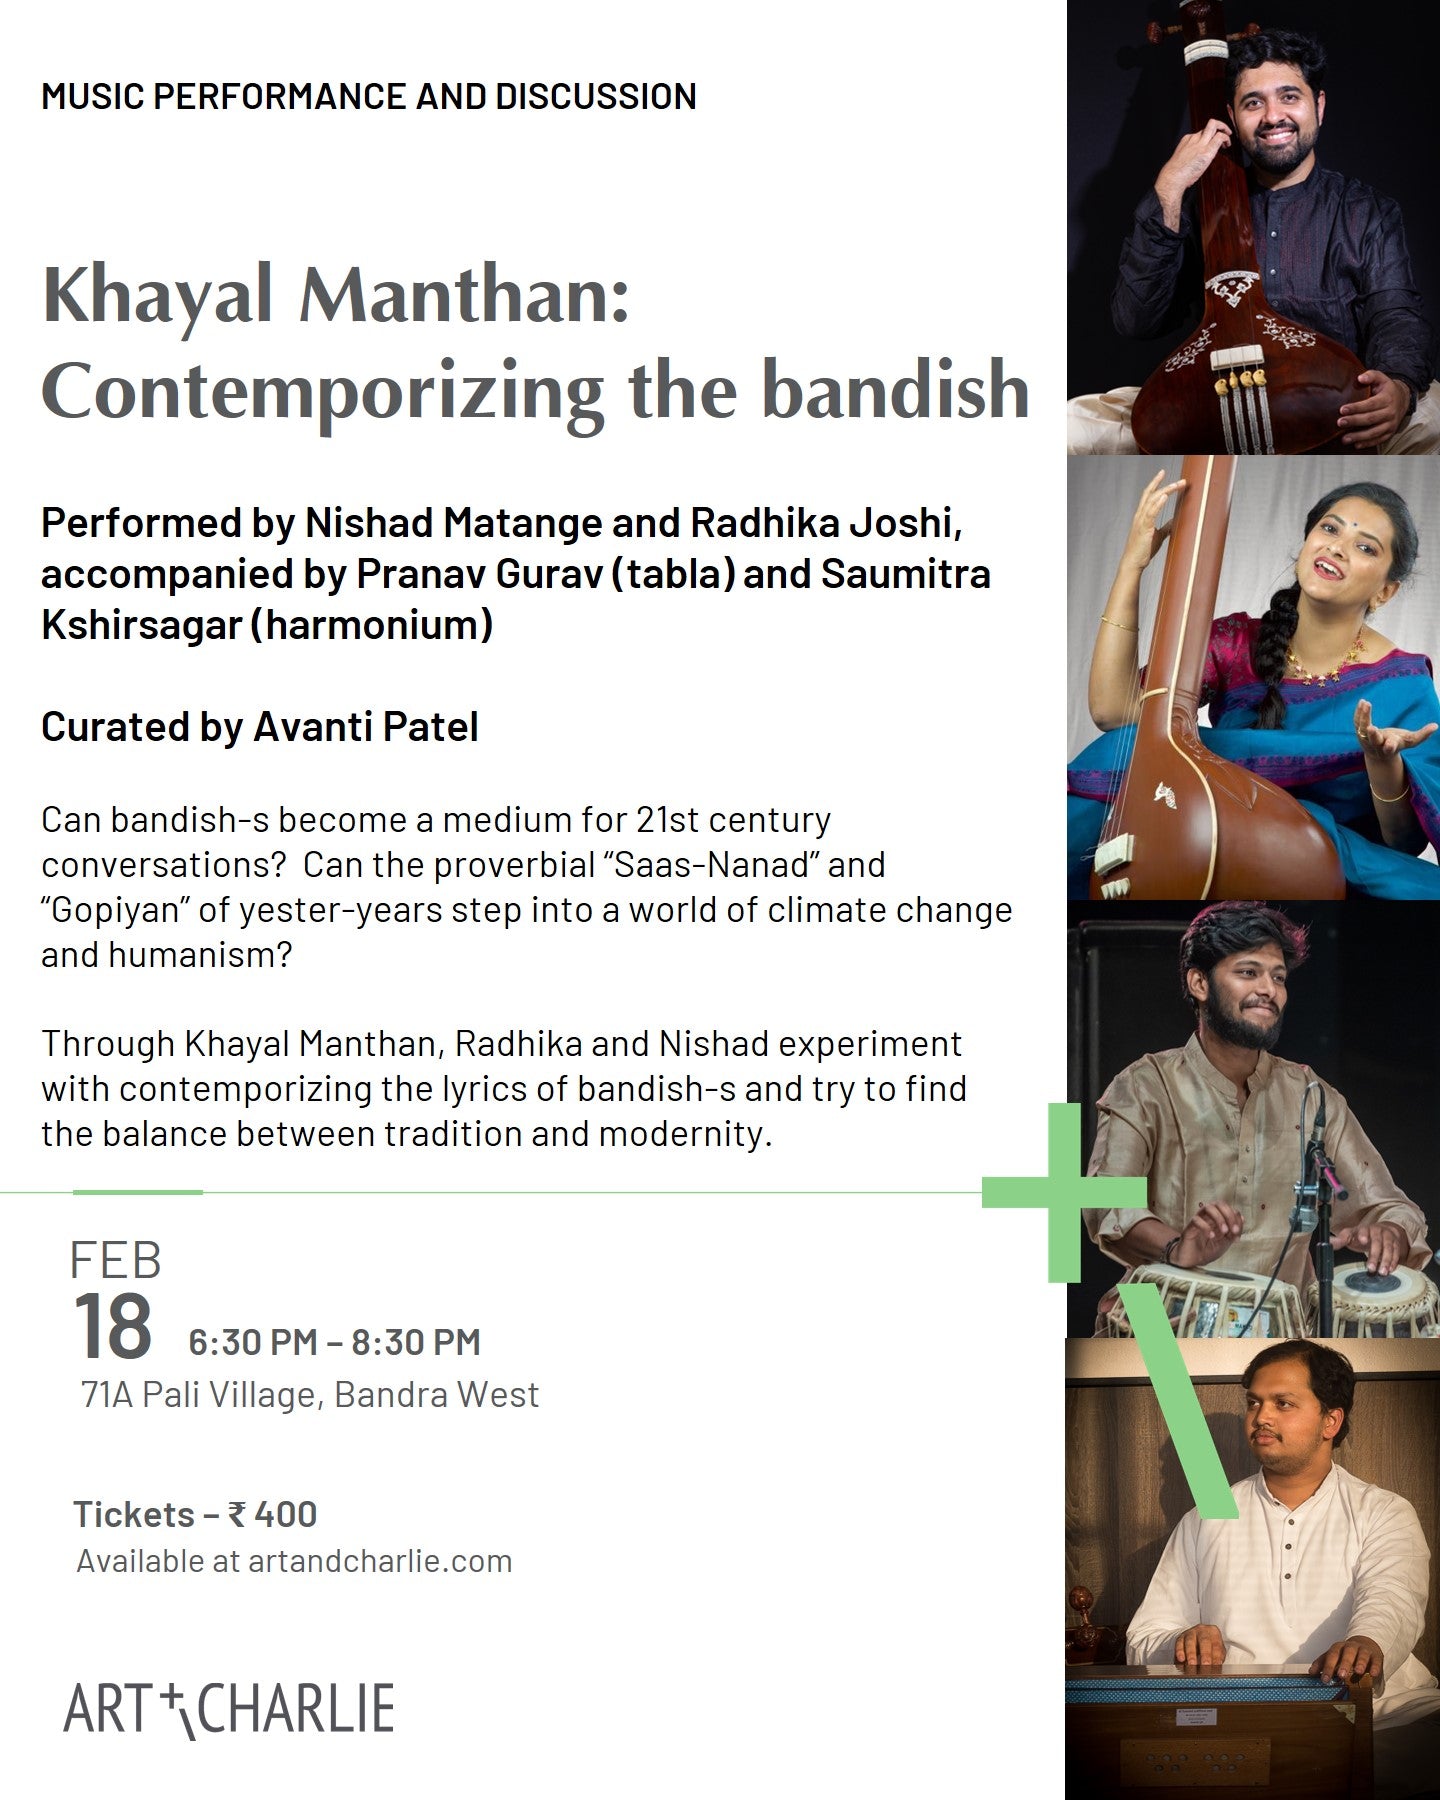 Ticket - Khayal Manthan: Contemporizing the bandish - Feb 18 - 6:30 PM